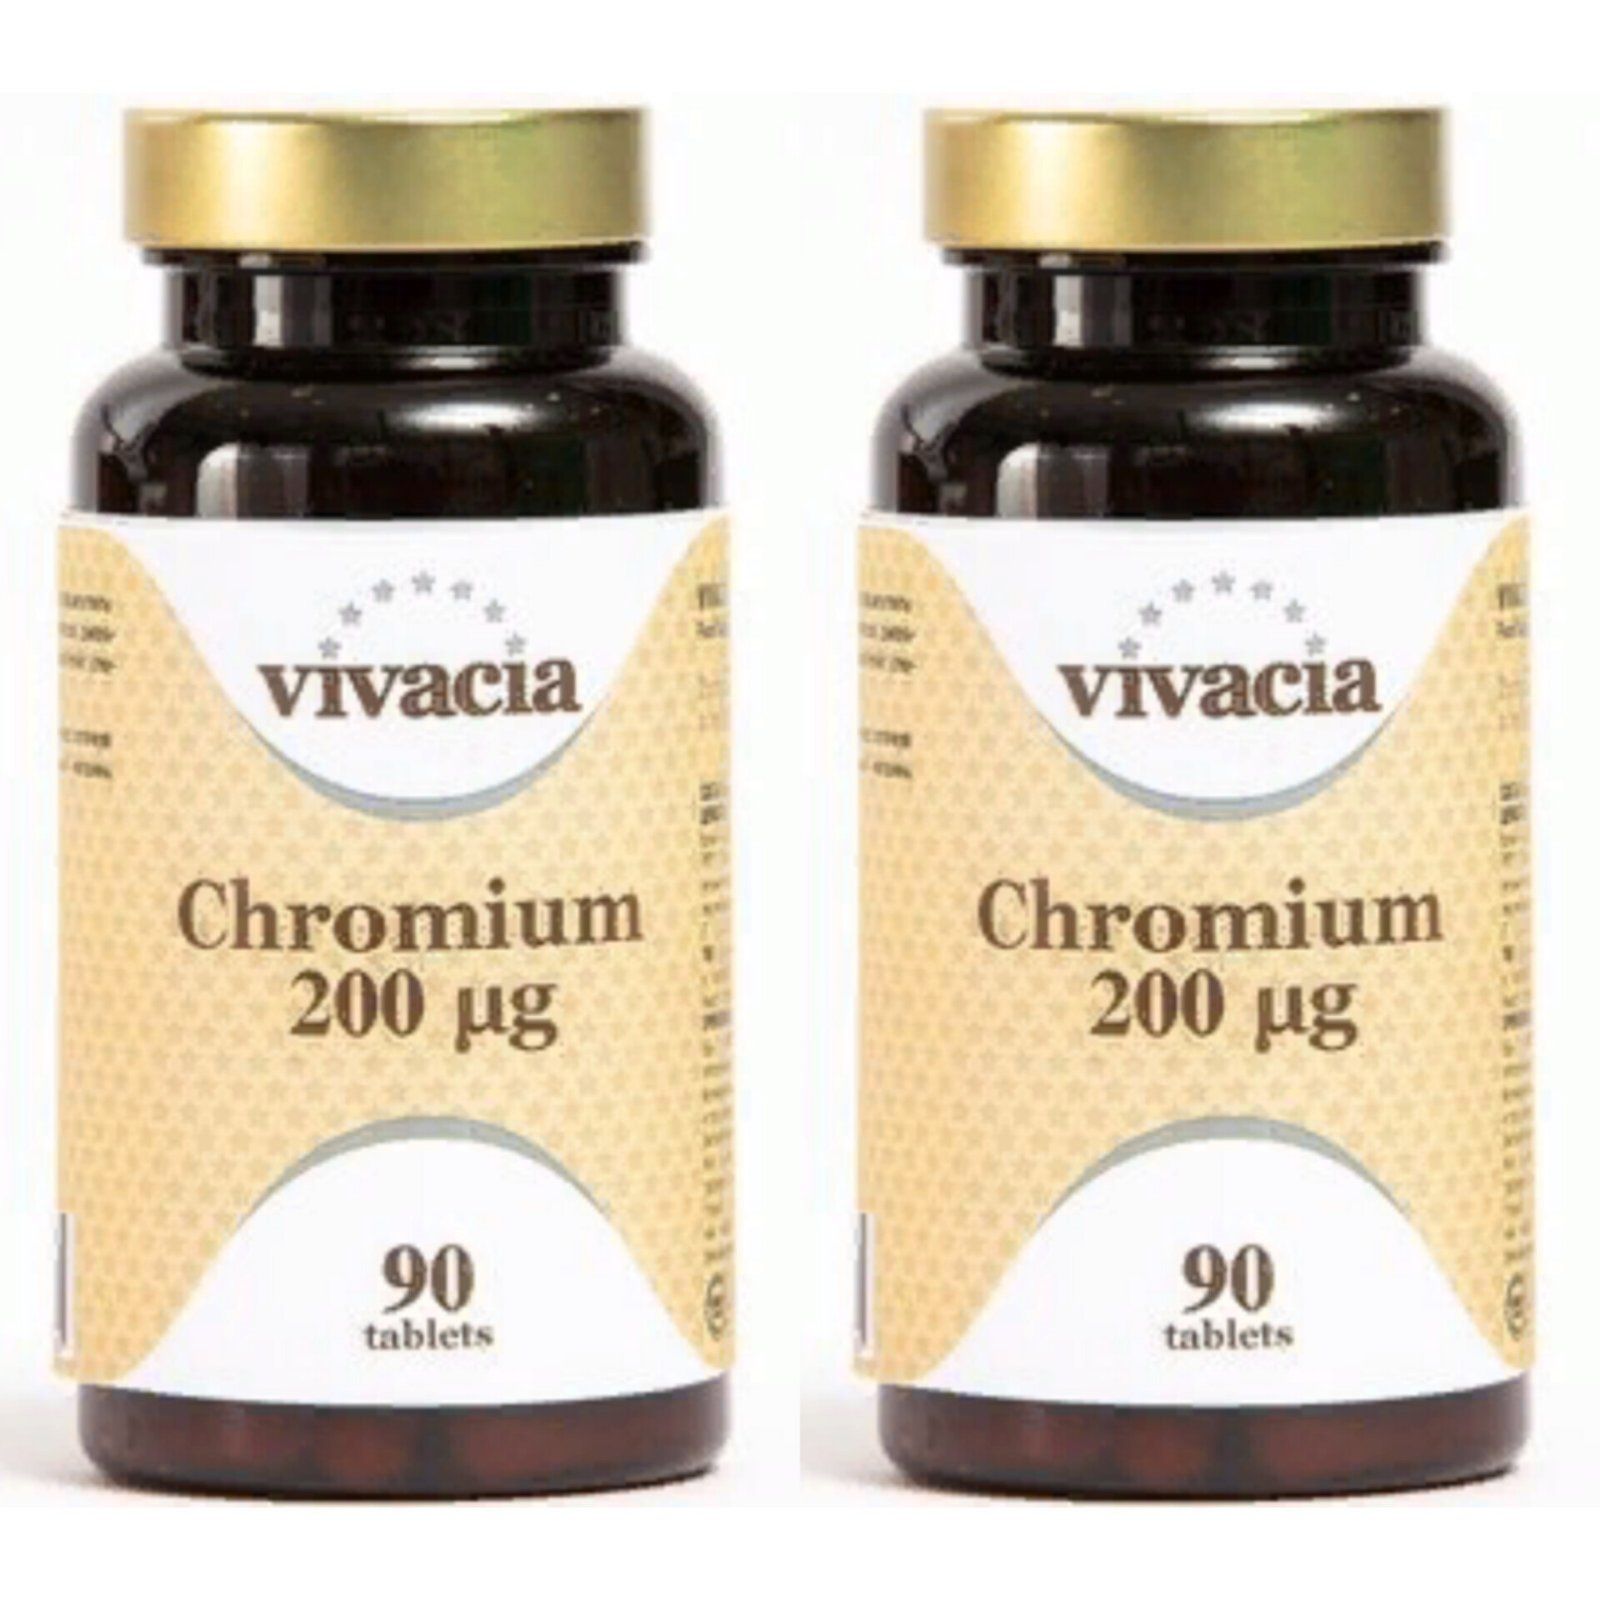 Vivacia vitamin. Vivacia Omega 3. Vivacia hair, Skin & Nails. Липотропный фактор vivacia. Vivacia co Enzyme q10 капсулы инструкция.